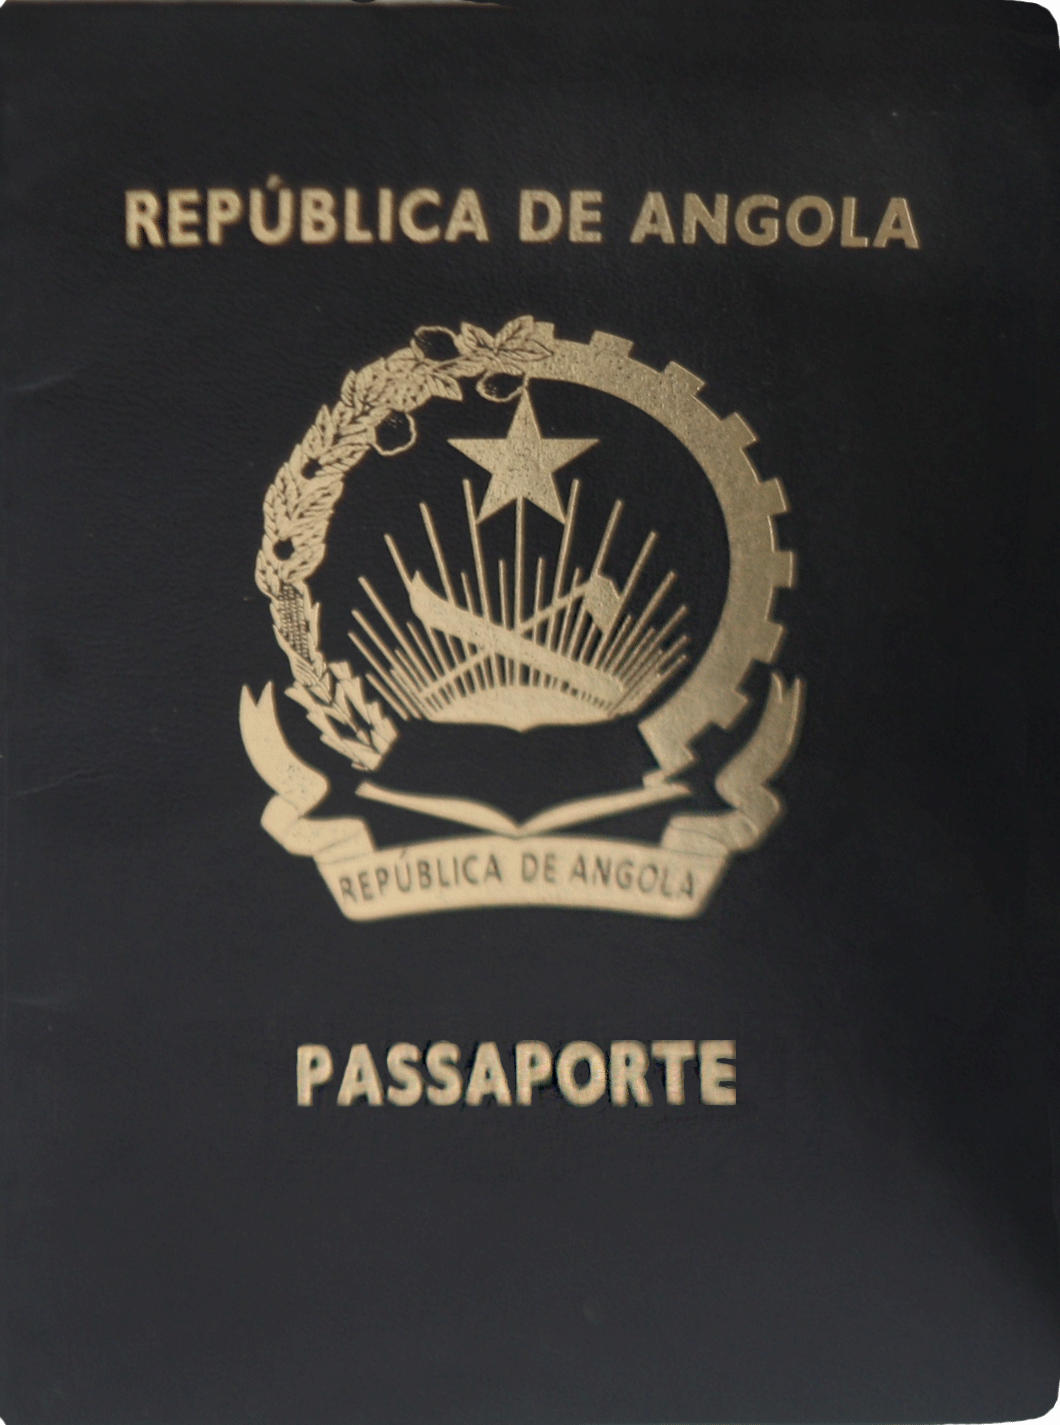 Vietnam visa requirement for Angolan